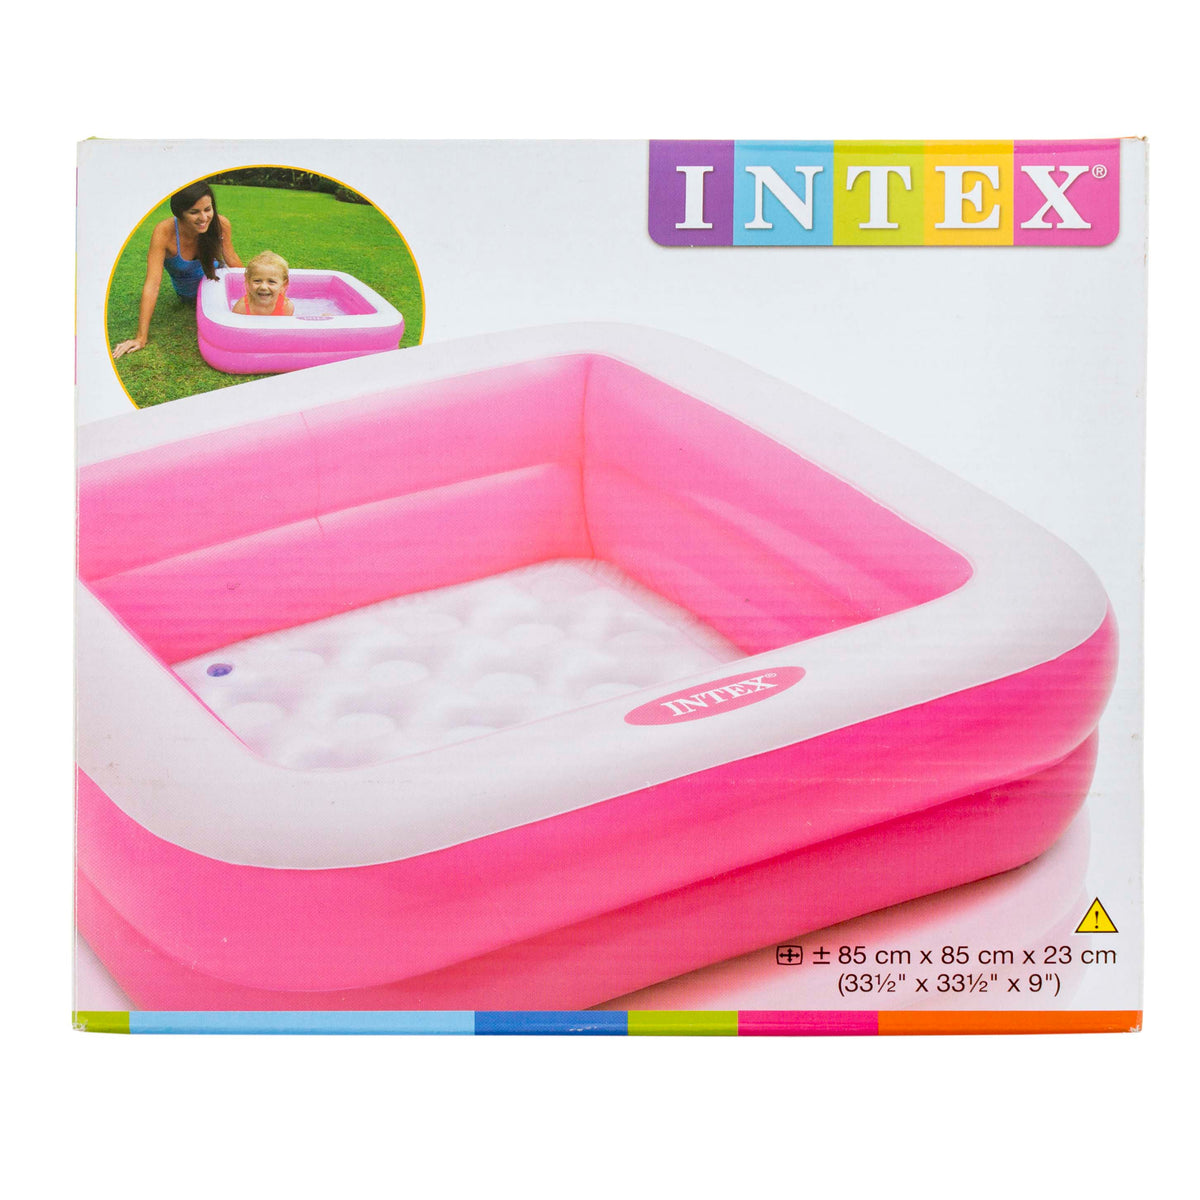 Play Box Baby Pool  ( 33.5" X 33.5" X 9" )